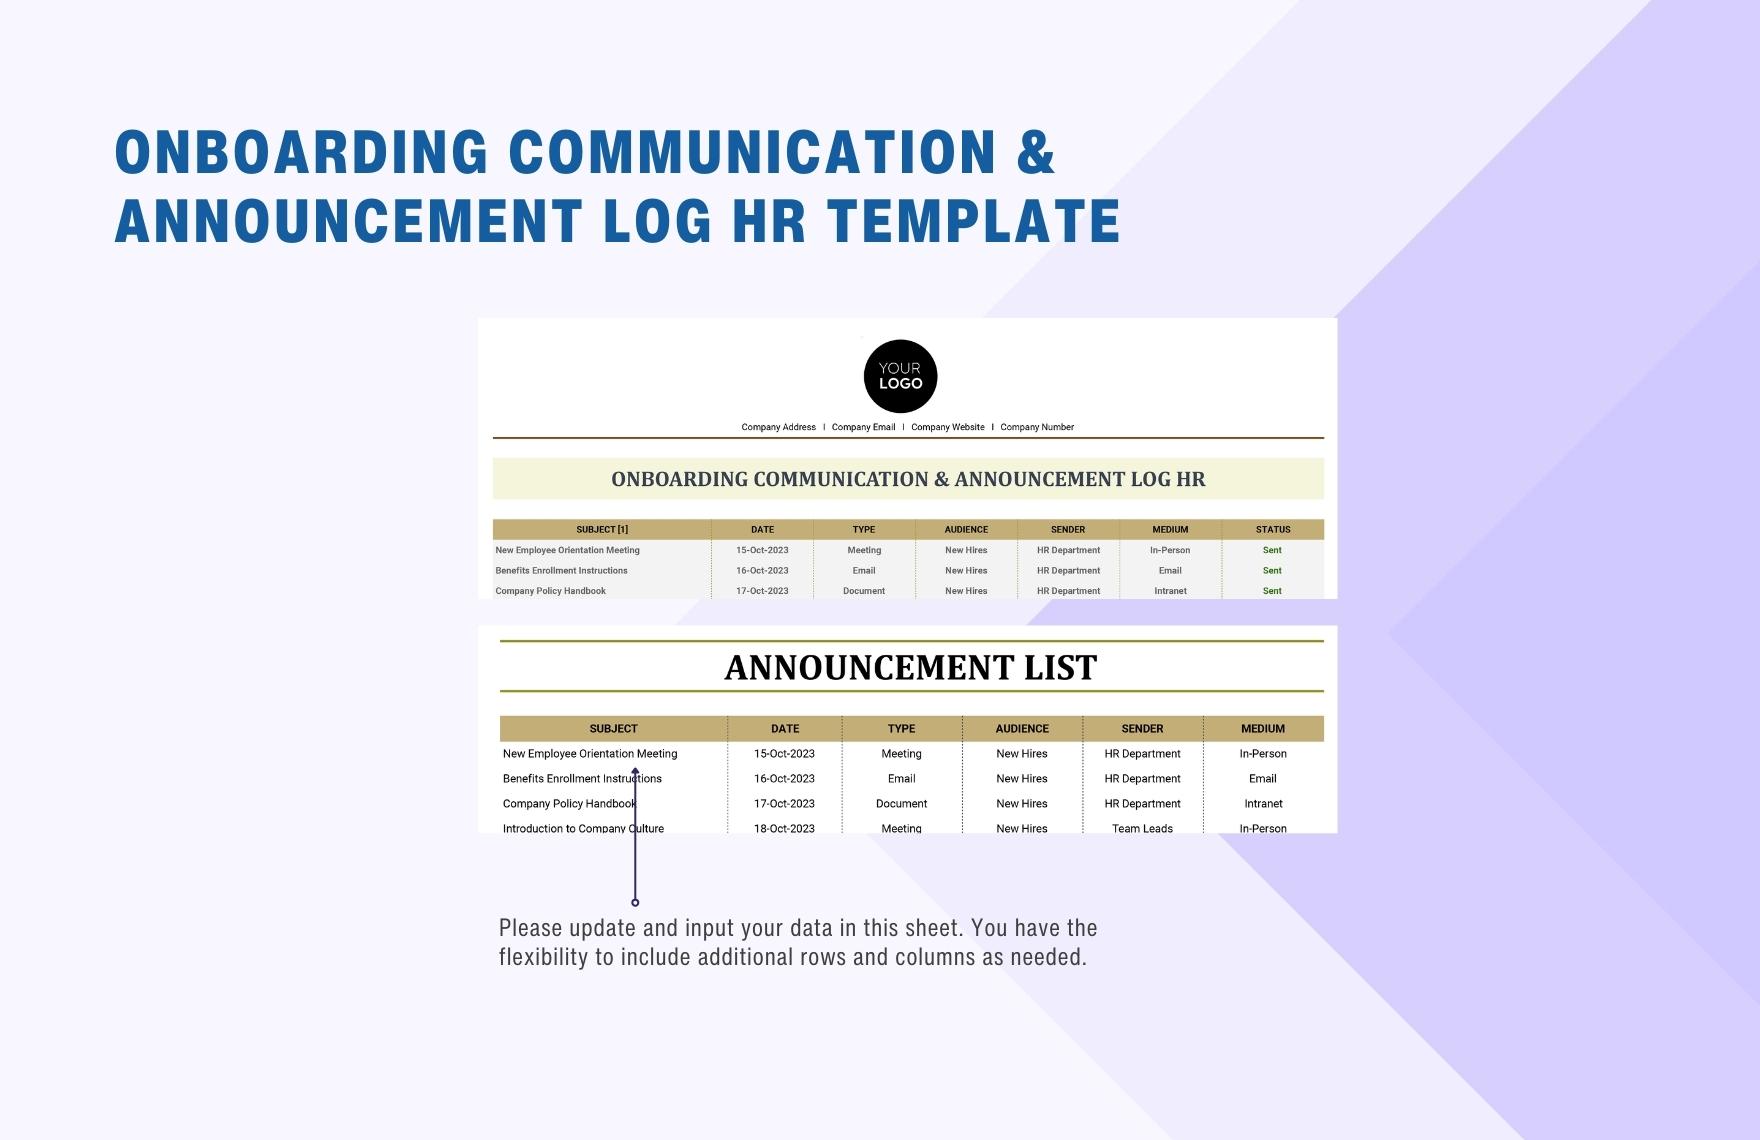 Onboarding Communication & Announcement Log HR Template